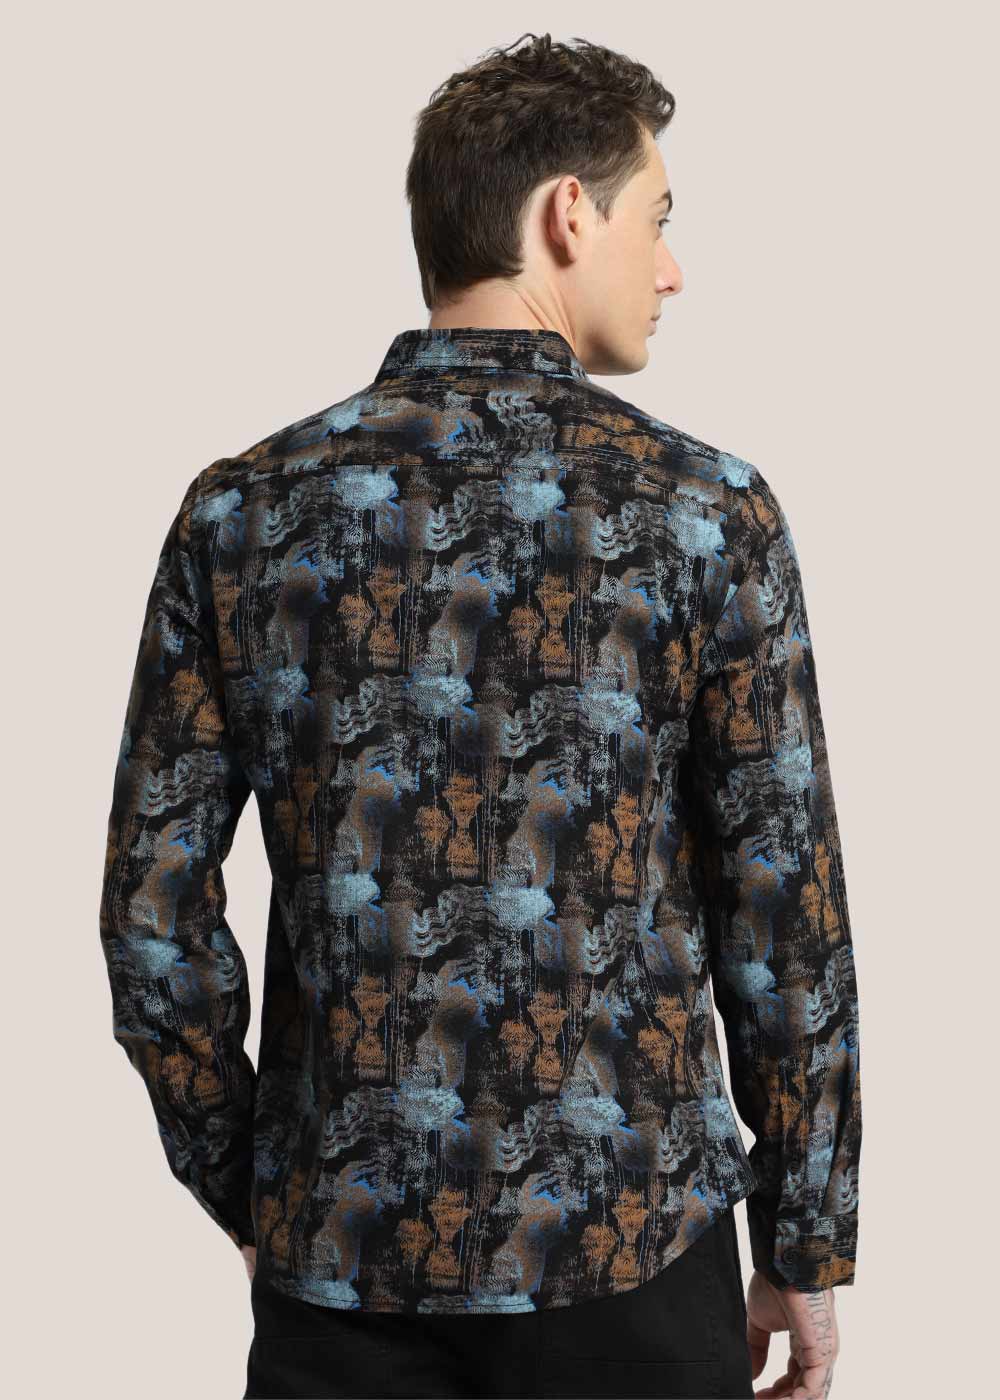 Geometric Textured Printed shirt